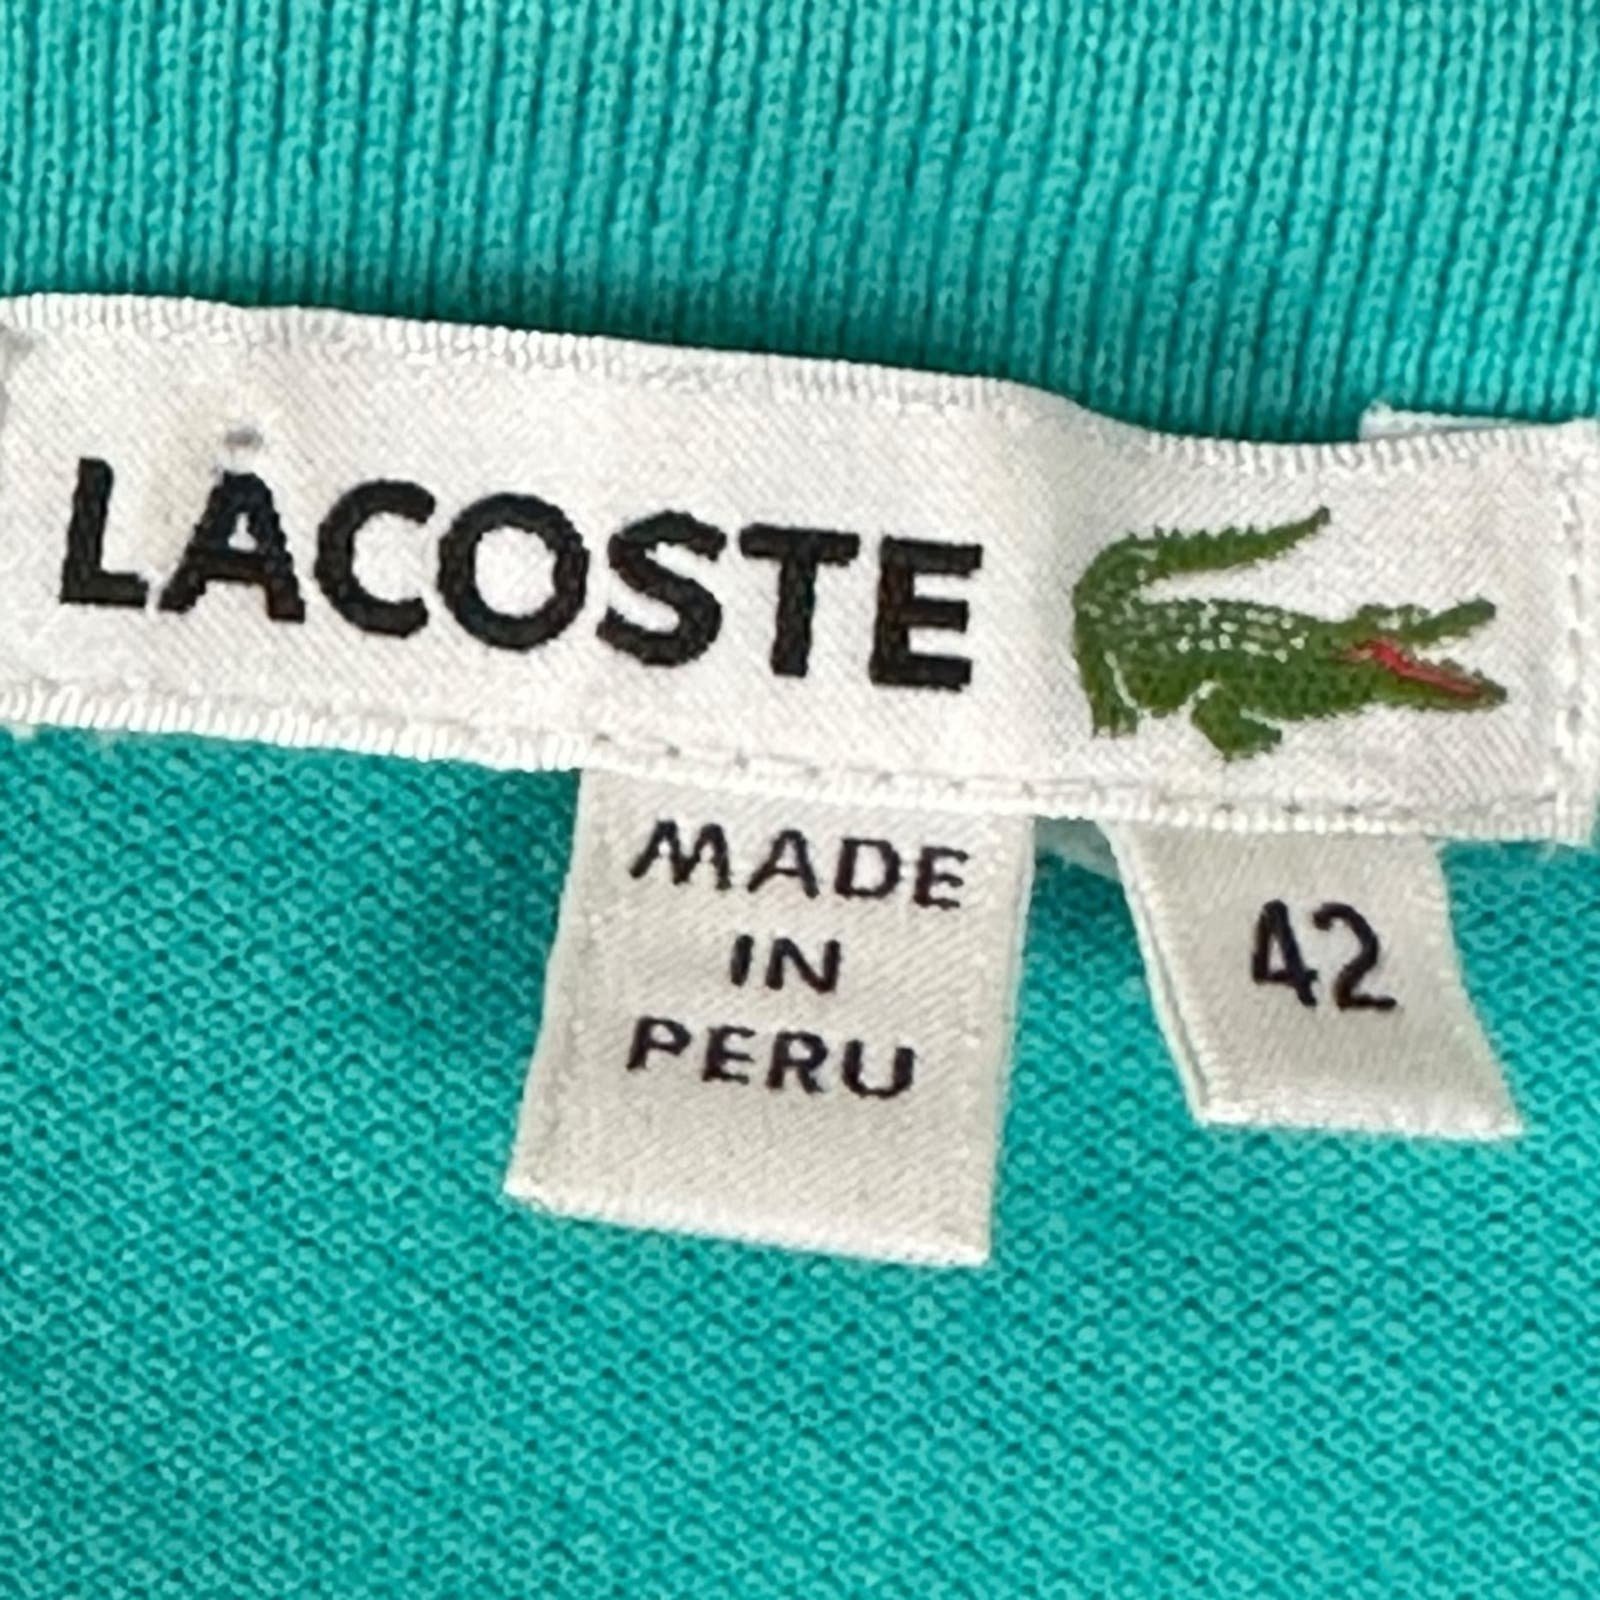 Buy Lacoste Women’s Slim Fit Stretch Pique Polo Size 42 Large Turquoise Aqua Blue KYSqQ1qim Low Price